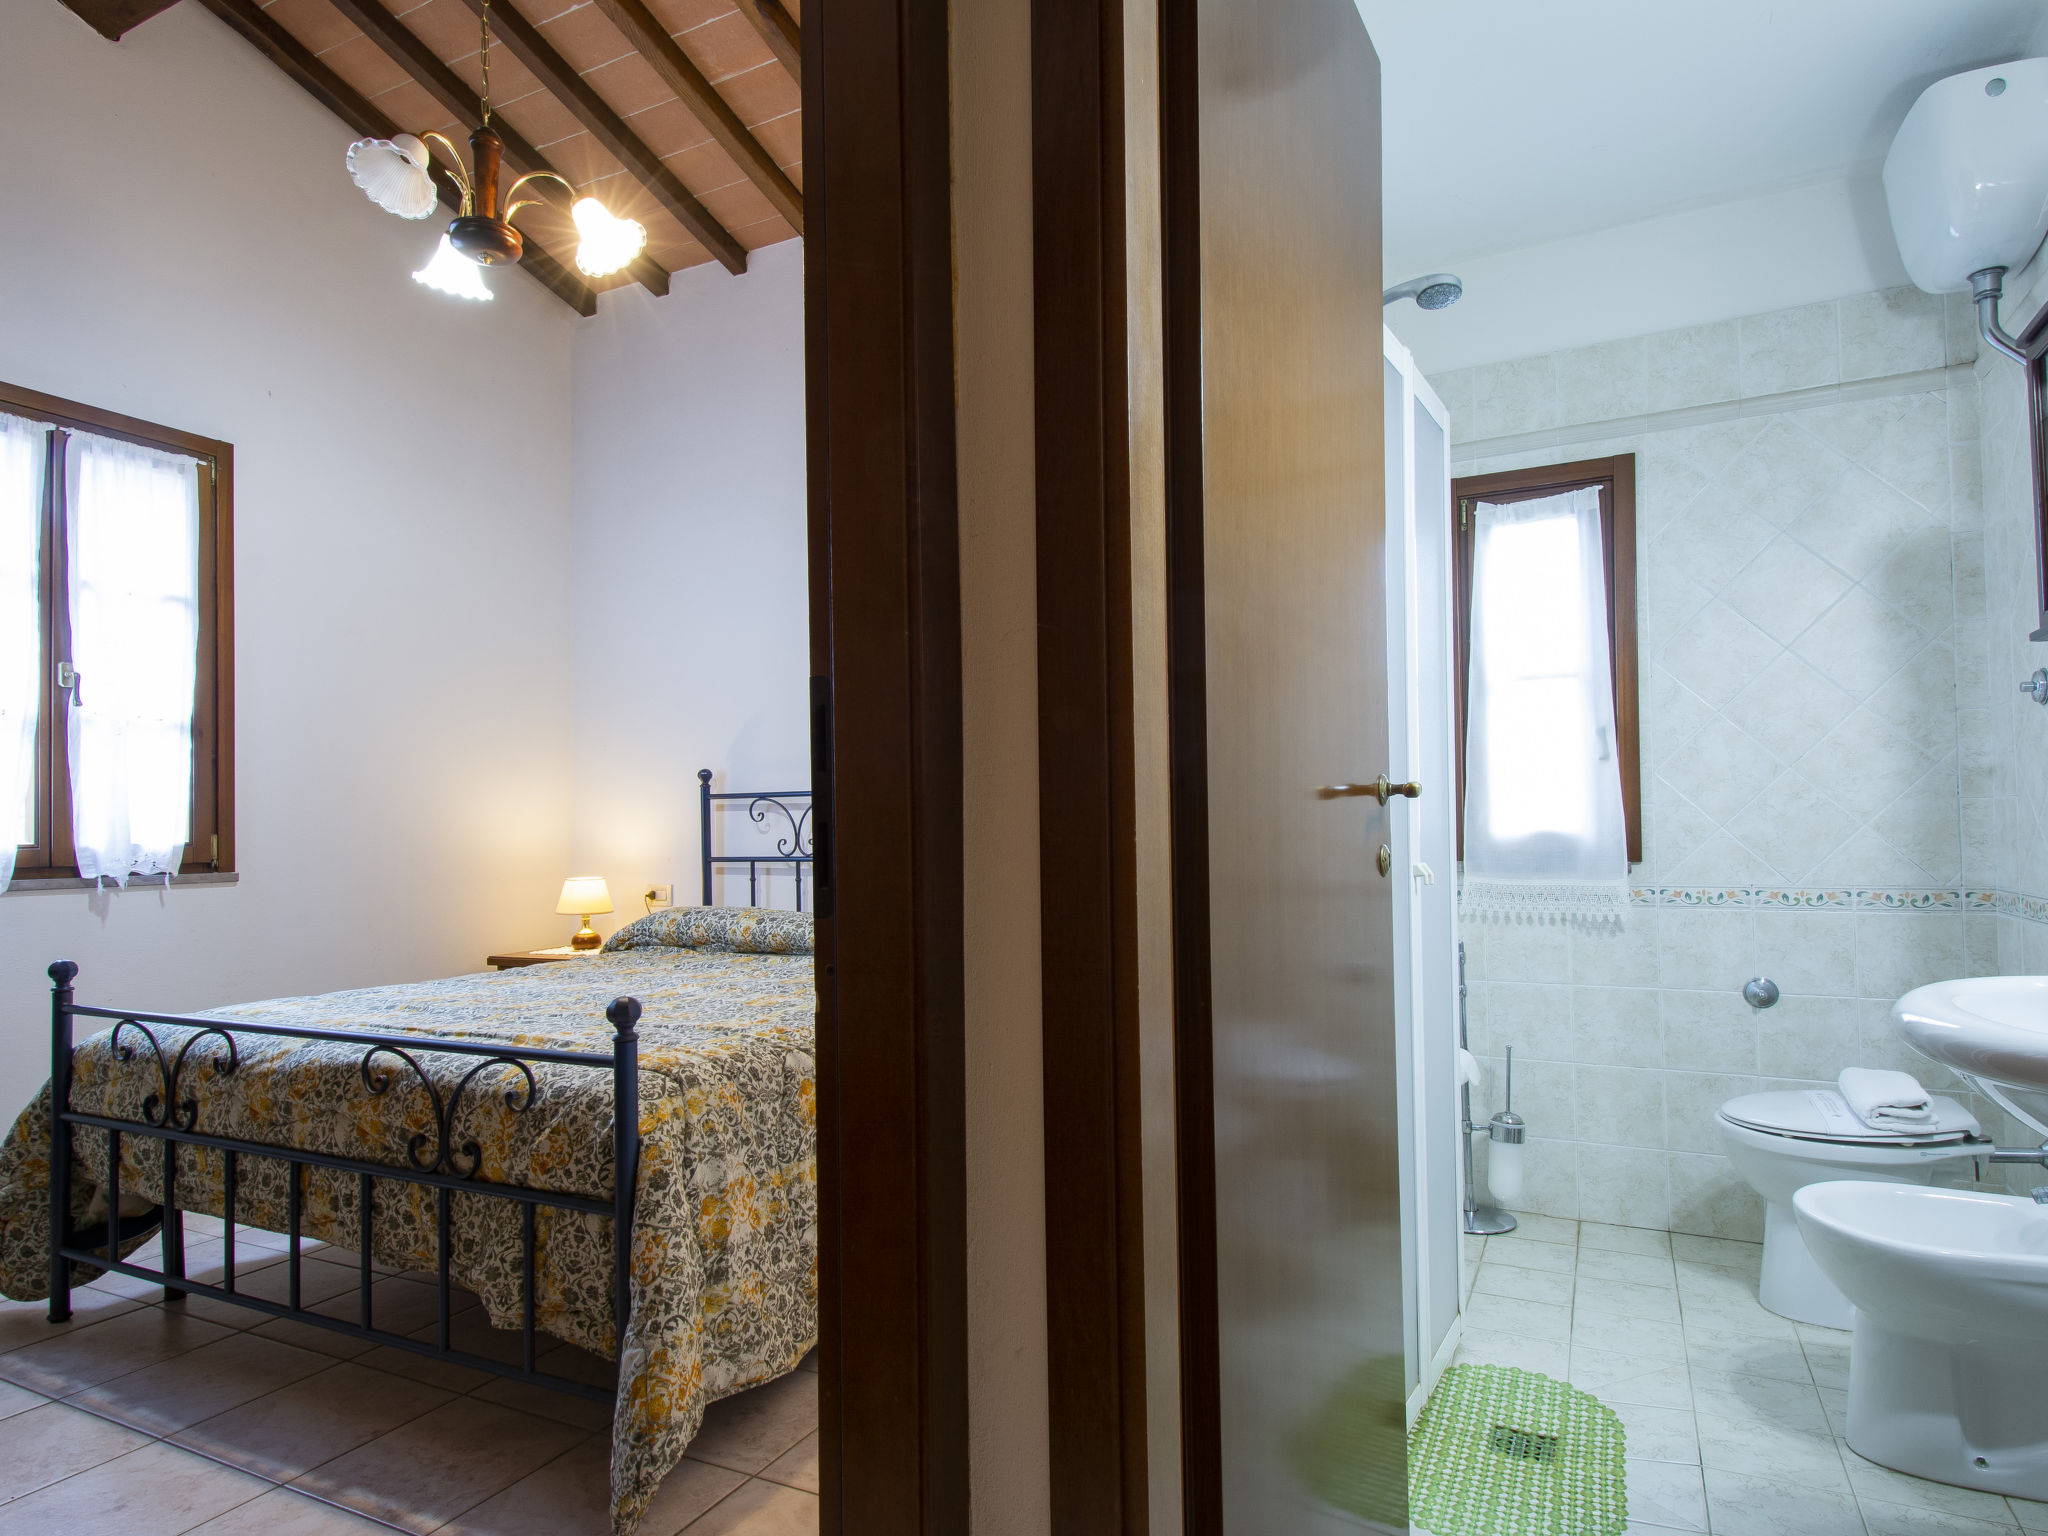 Foto 9 - Casa con 1 camera da letto a Certaldo con piscina e giardino